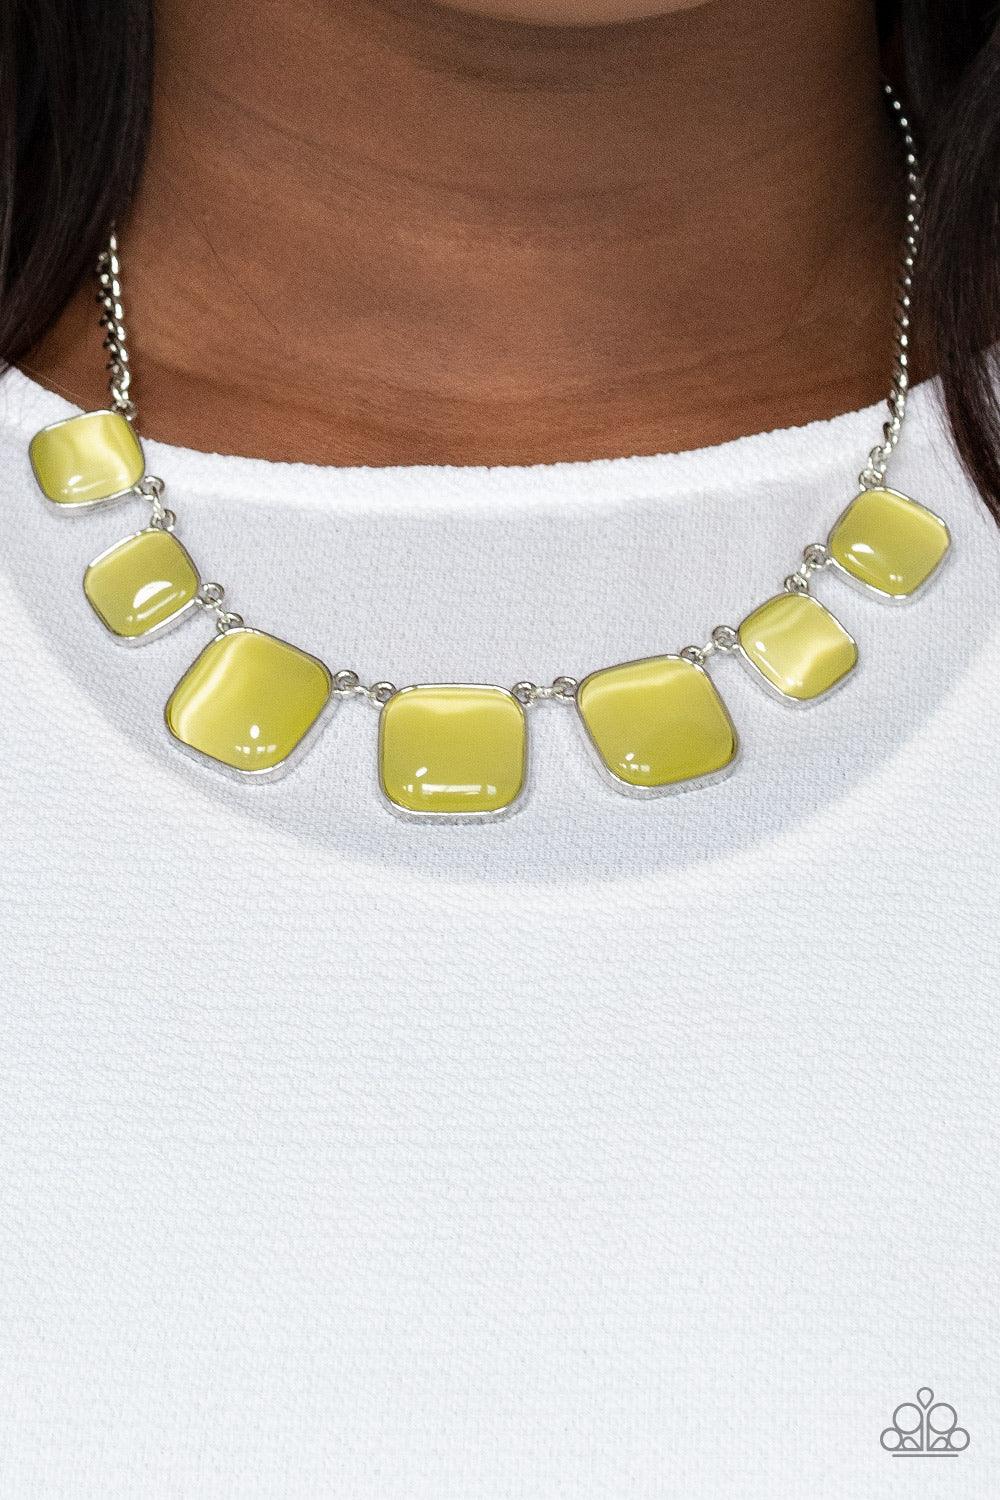 Aura Allure Yellow Necklace - Jewelry by Bretta - Jewelry by Bretta